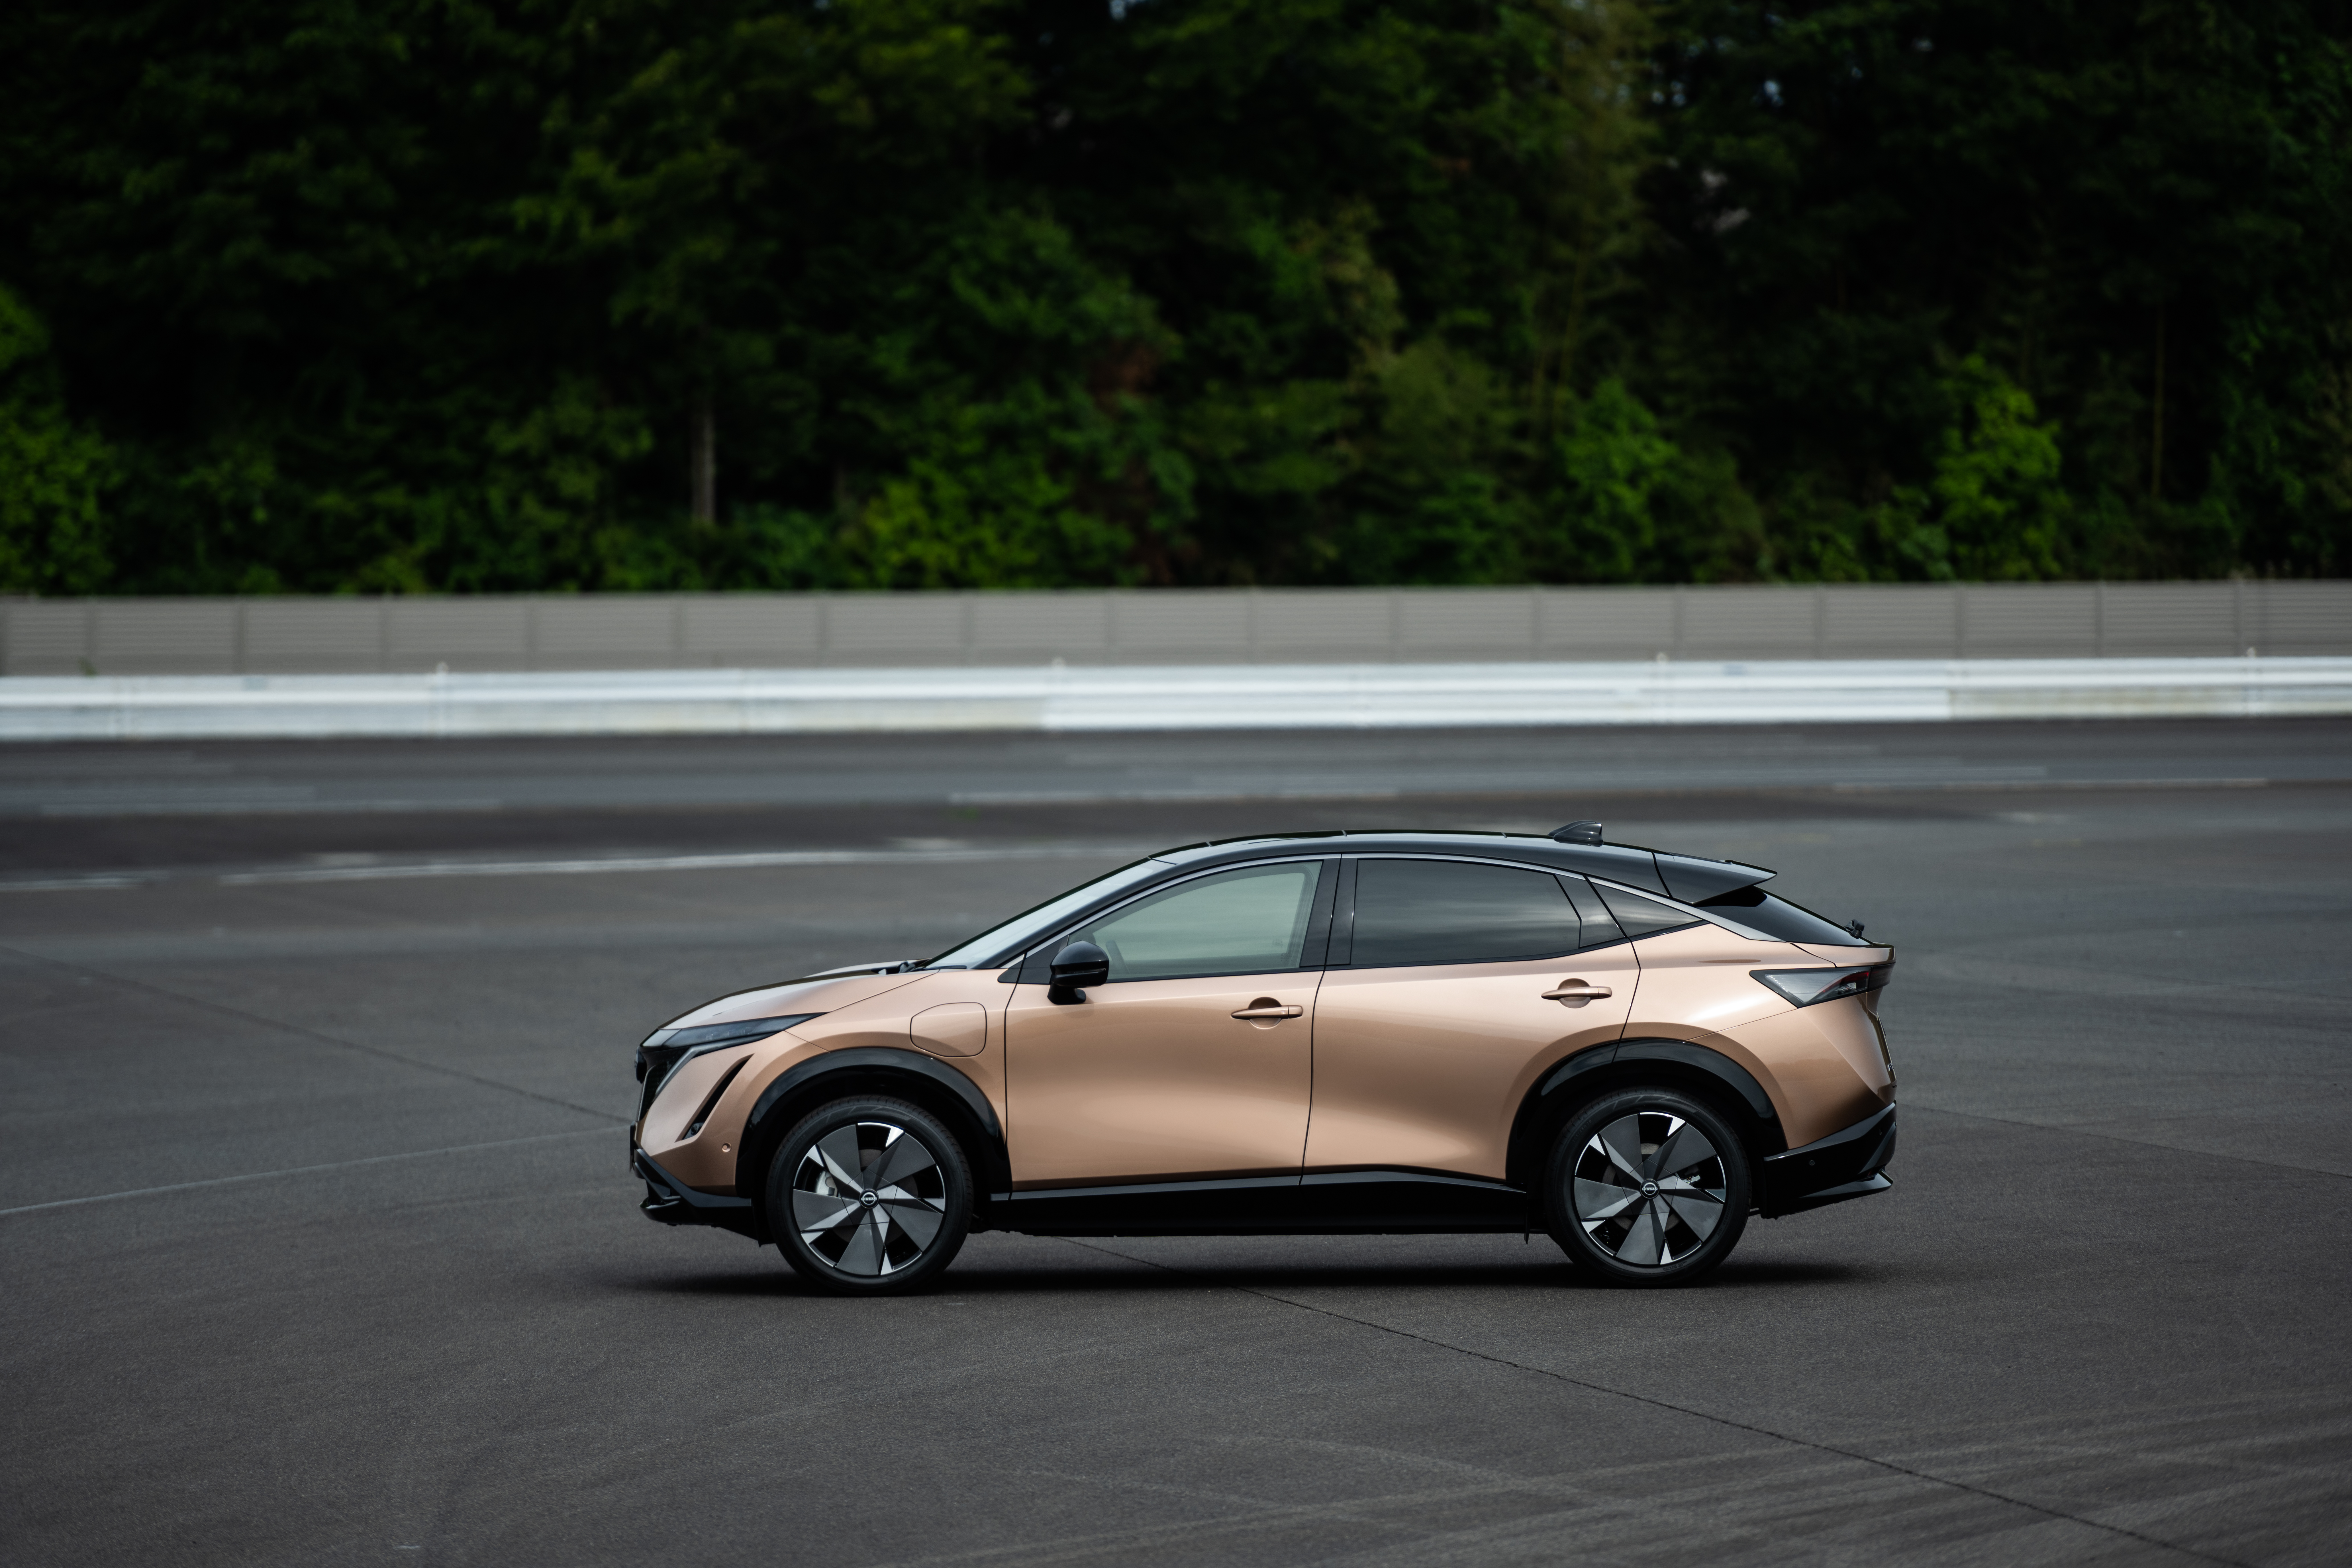 Nissan stakes its EV future on the 300-mile range Ariya crossover